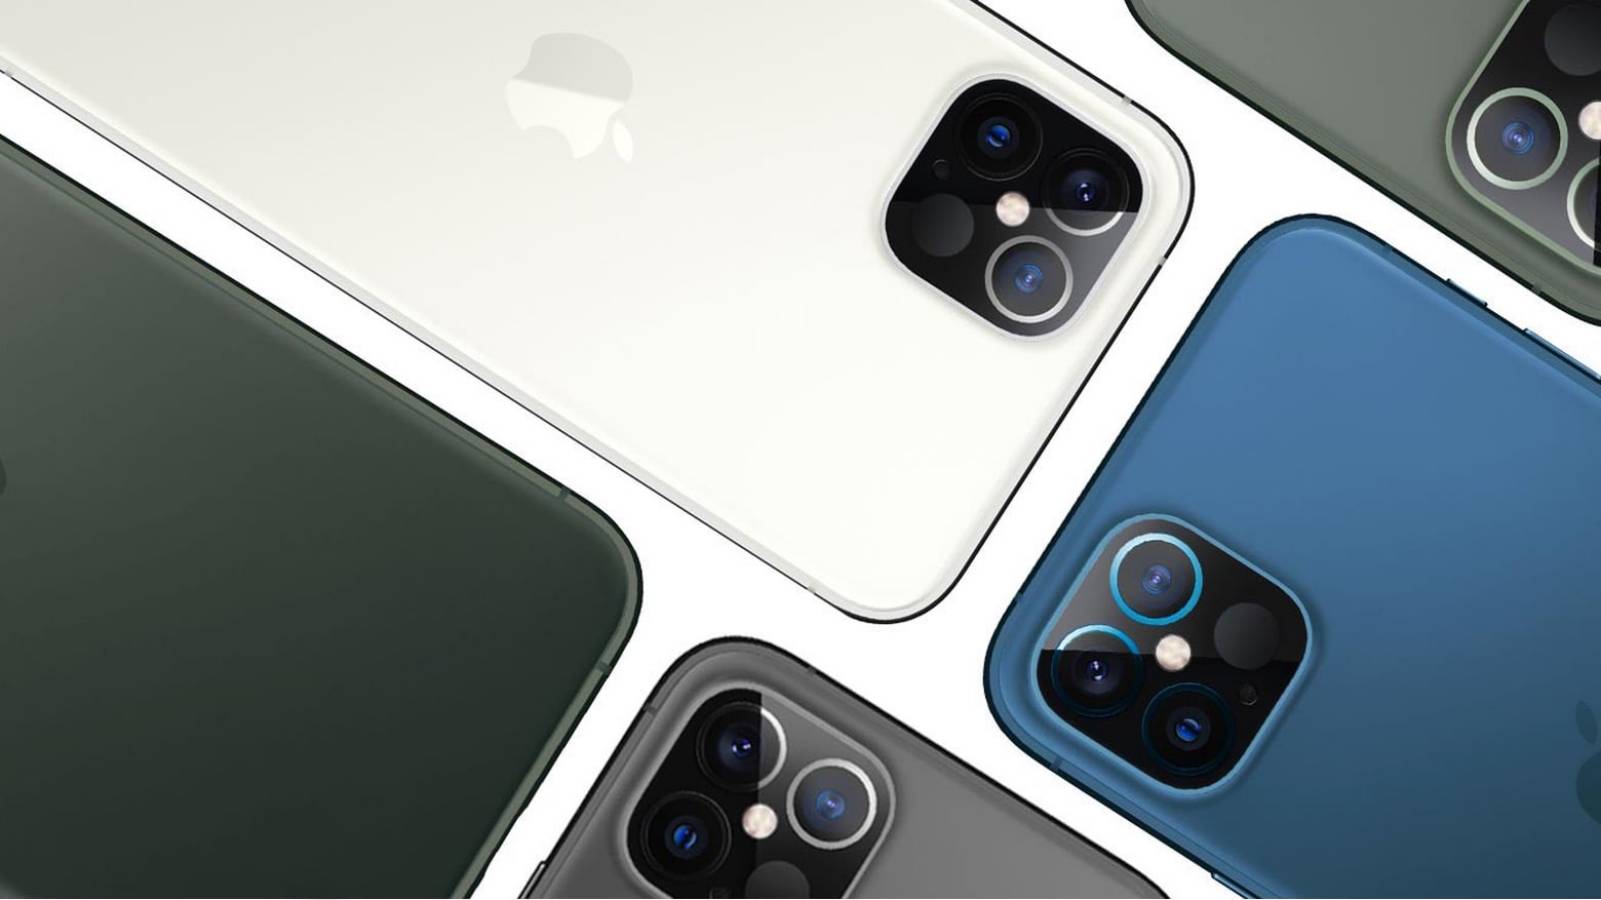 iPhone 12 Pro sensor shift